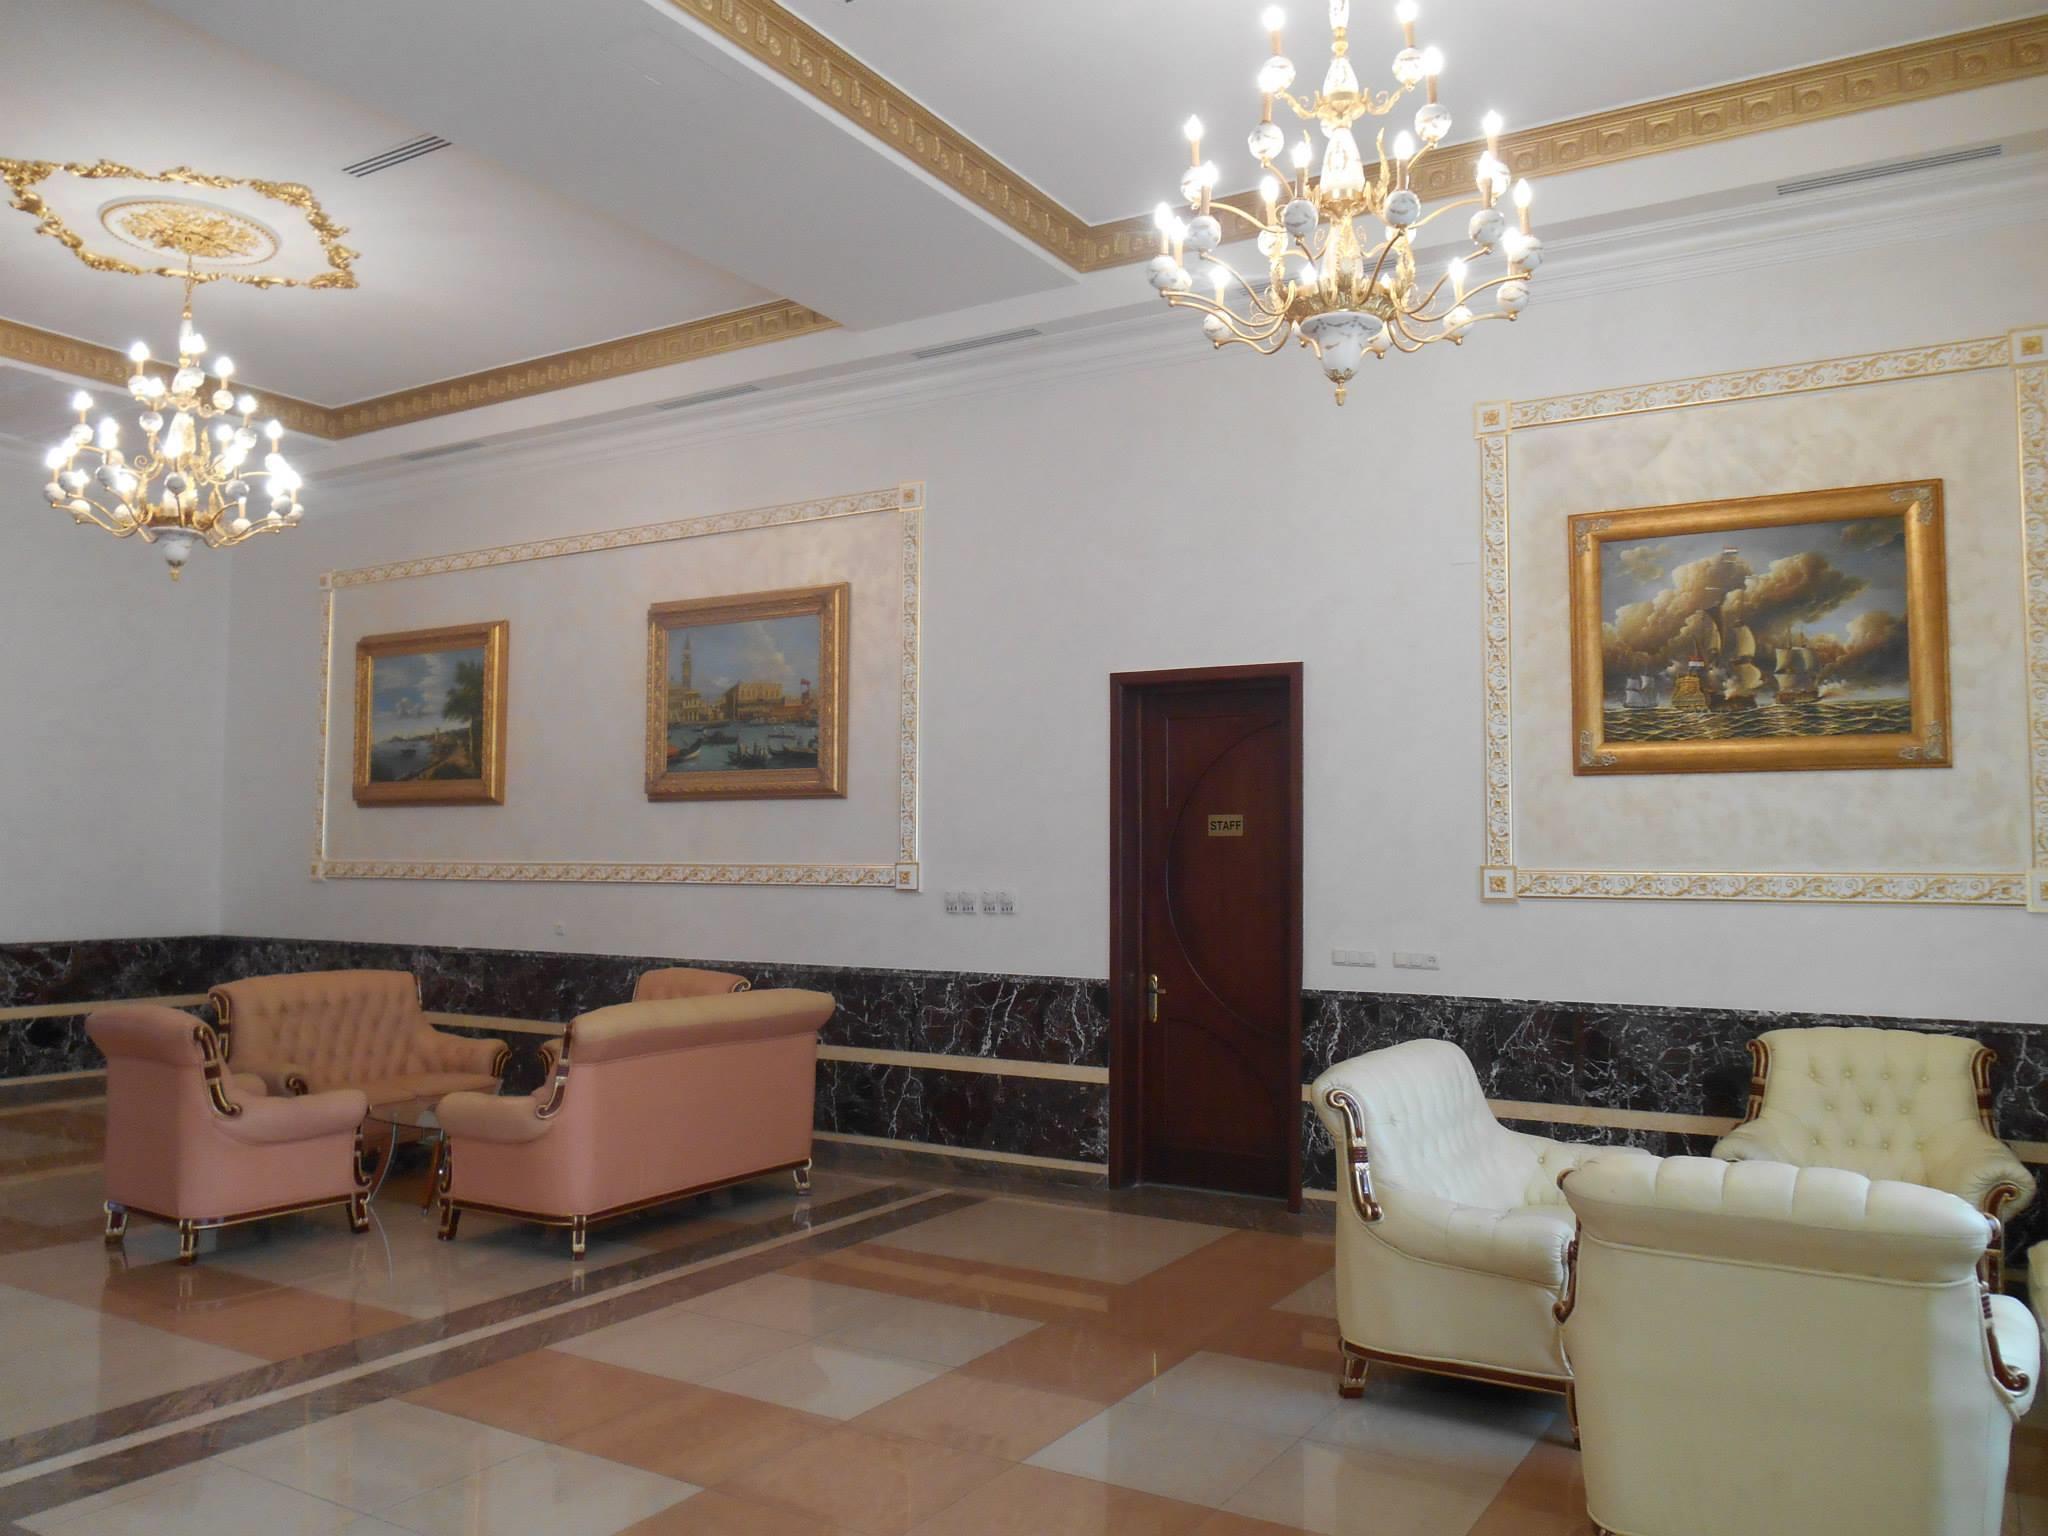 Туры в Armenian Royal Palace